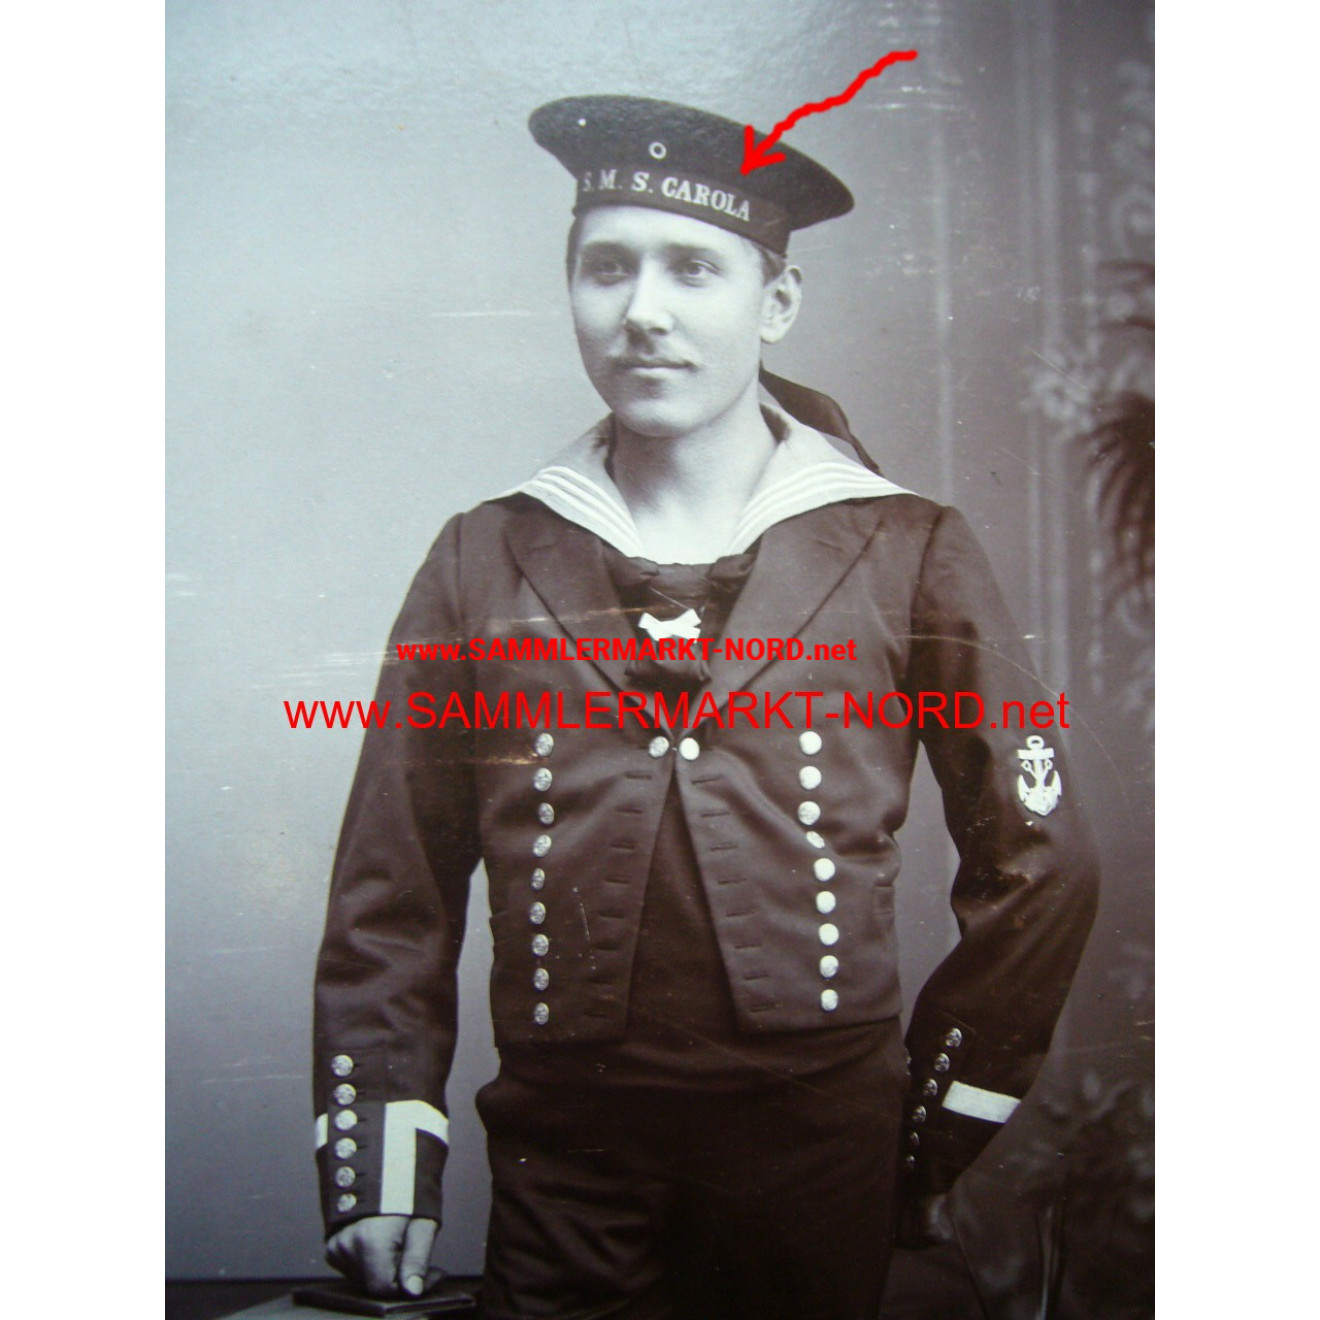 Kabinettfoto - Kaiserliche Marine - Matrose S.M.S. Carola